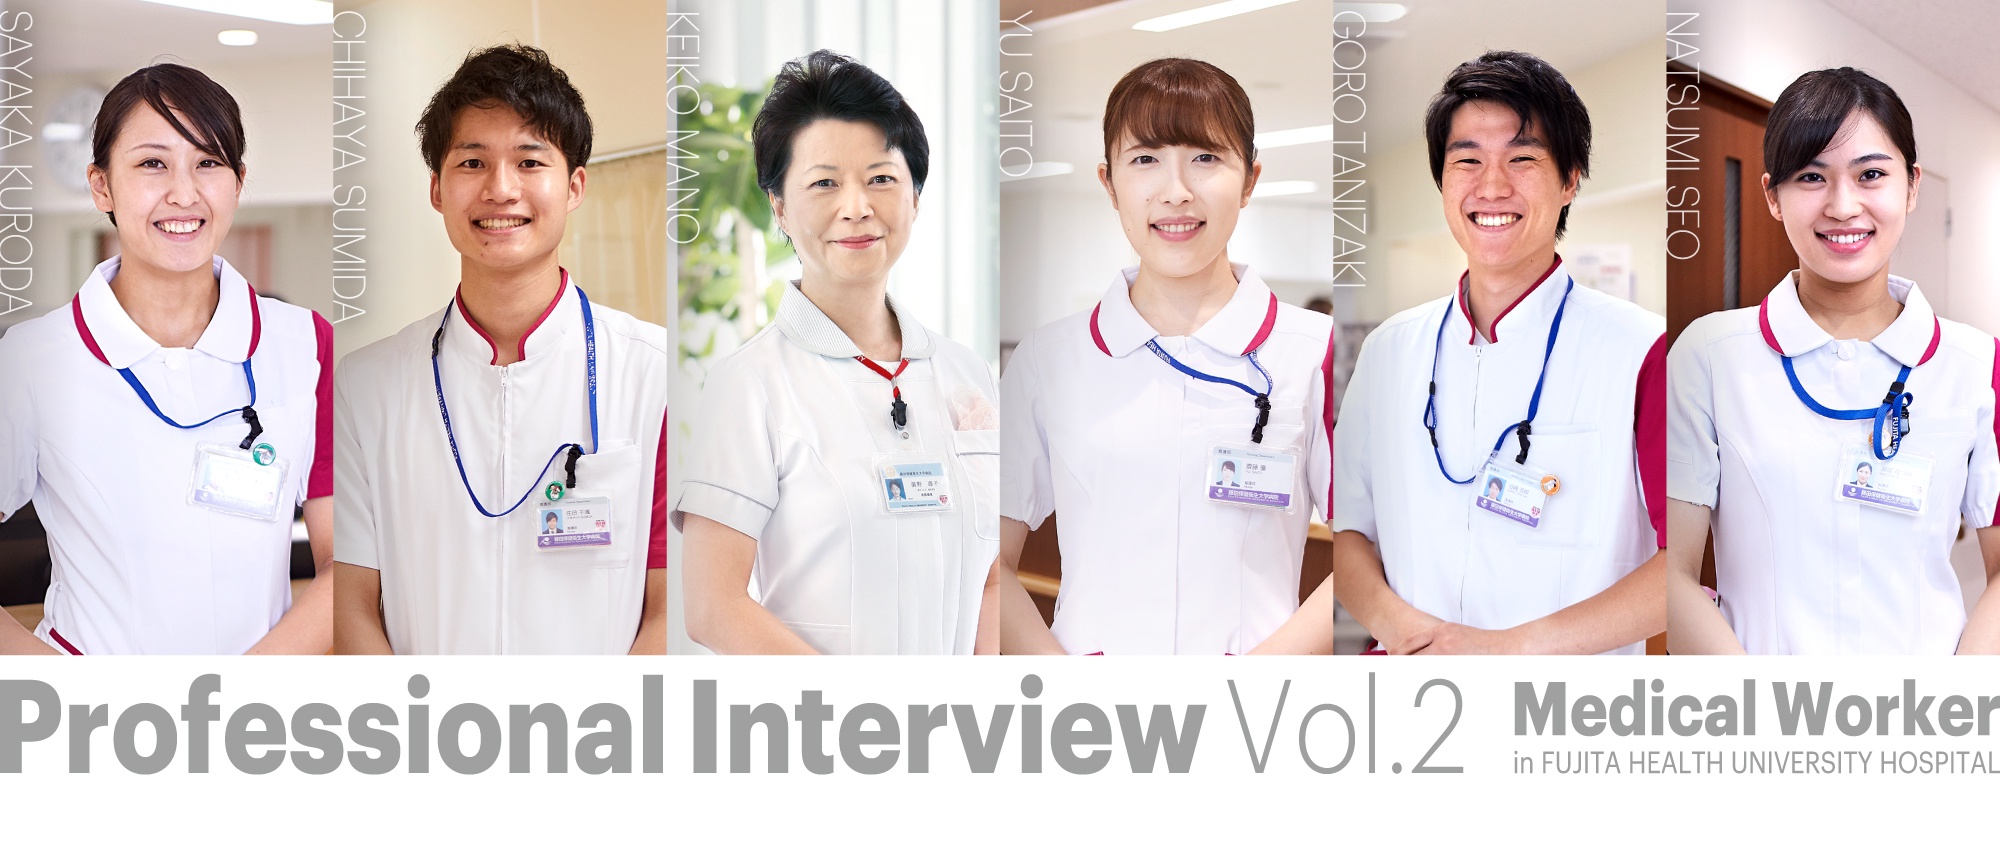 Professional Interview Vol.2 Medical Worker in FUJITA HEALTH UNIVERSITY HOSPITAL